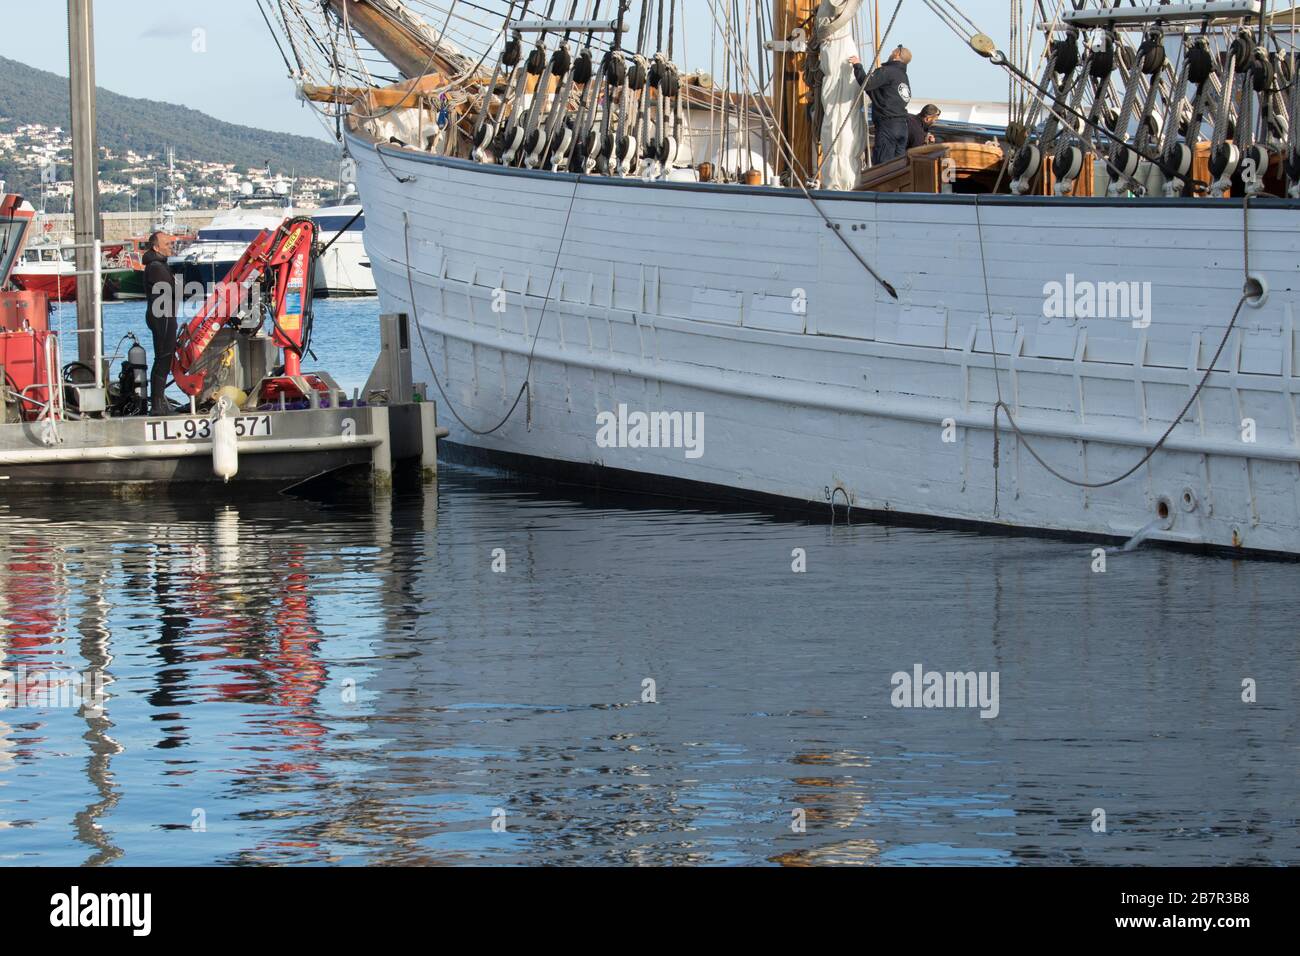 MARINE-EVENEMENT - SAINT MALO LE FRANCAIS - Old Chip, Segler Leben - 3 Matten Barque de 1948 - erste segelboot Demontage ... Stockfoto